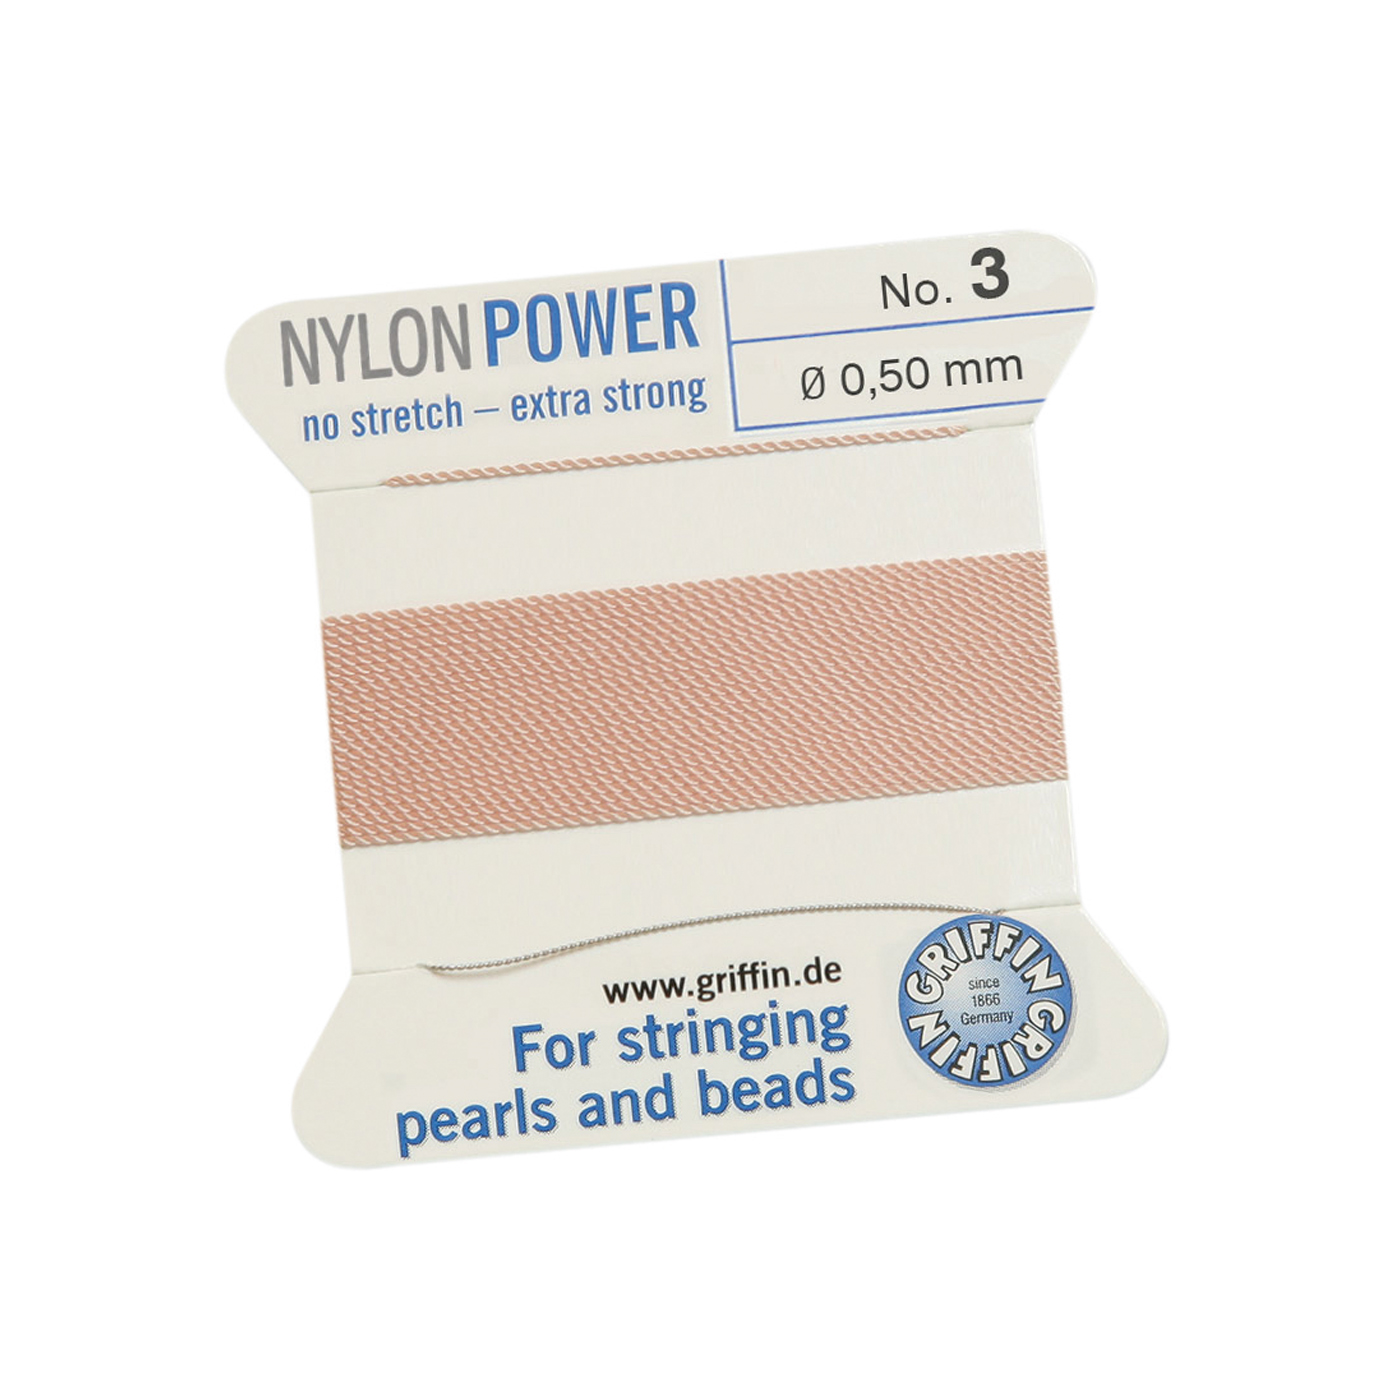 Bead Cord NylonPower, Light Pink, No. 3 - 2 m